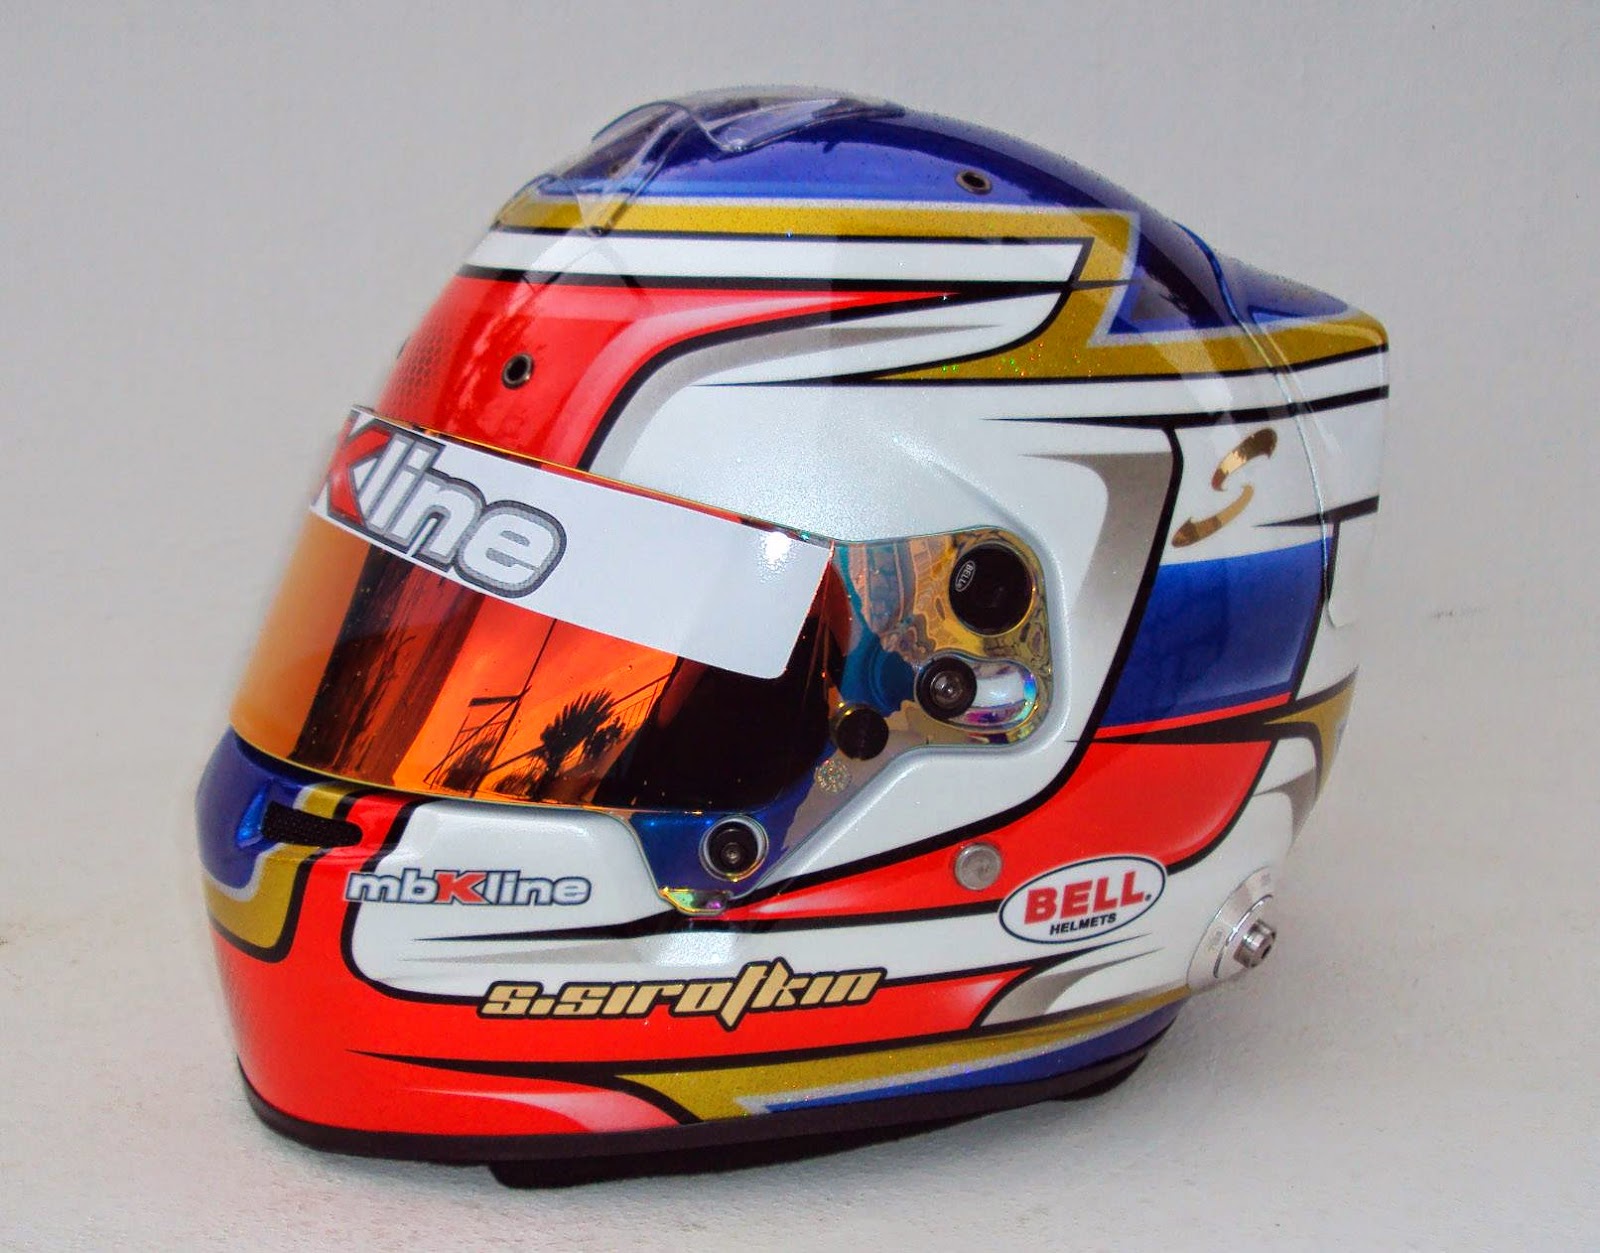 Racing Helmets Garage: Bell HP7 S.Sirotkin Monaco+Moscow 2014 by MB K Line